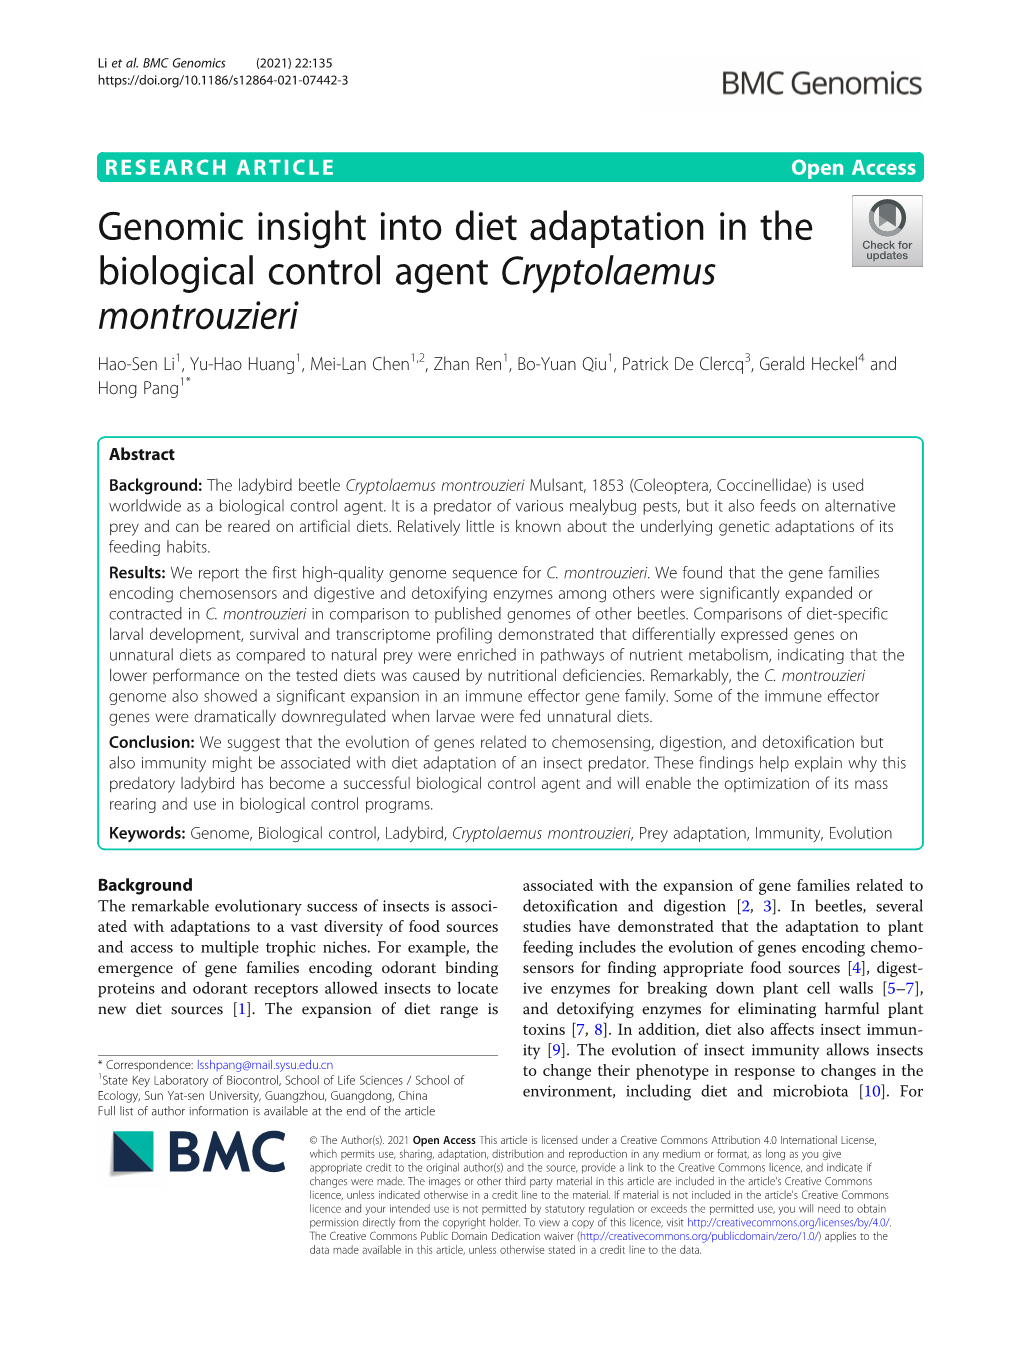 Genomic Insight Into Diet Adaptation in the Biological Control Agent Cryptolaemus Montrouzieri